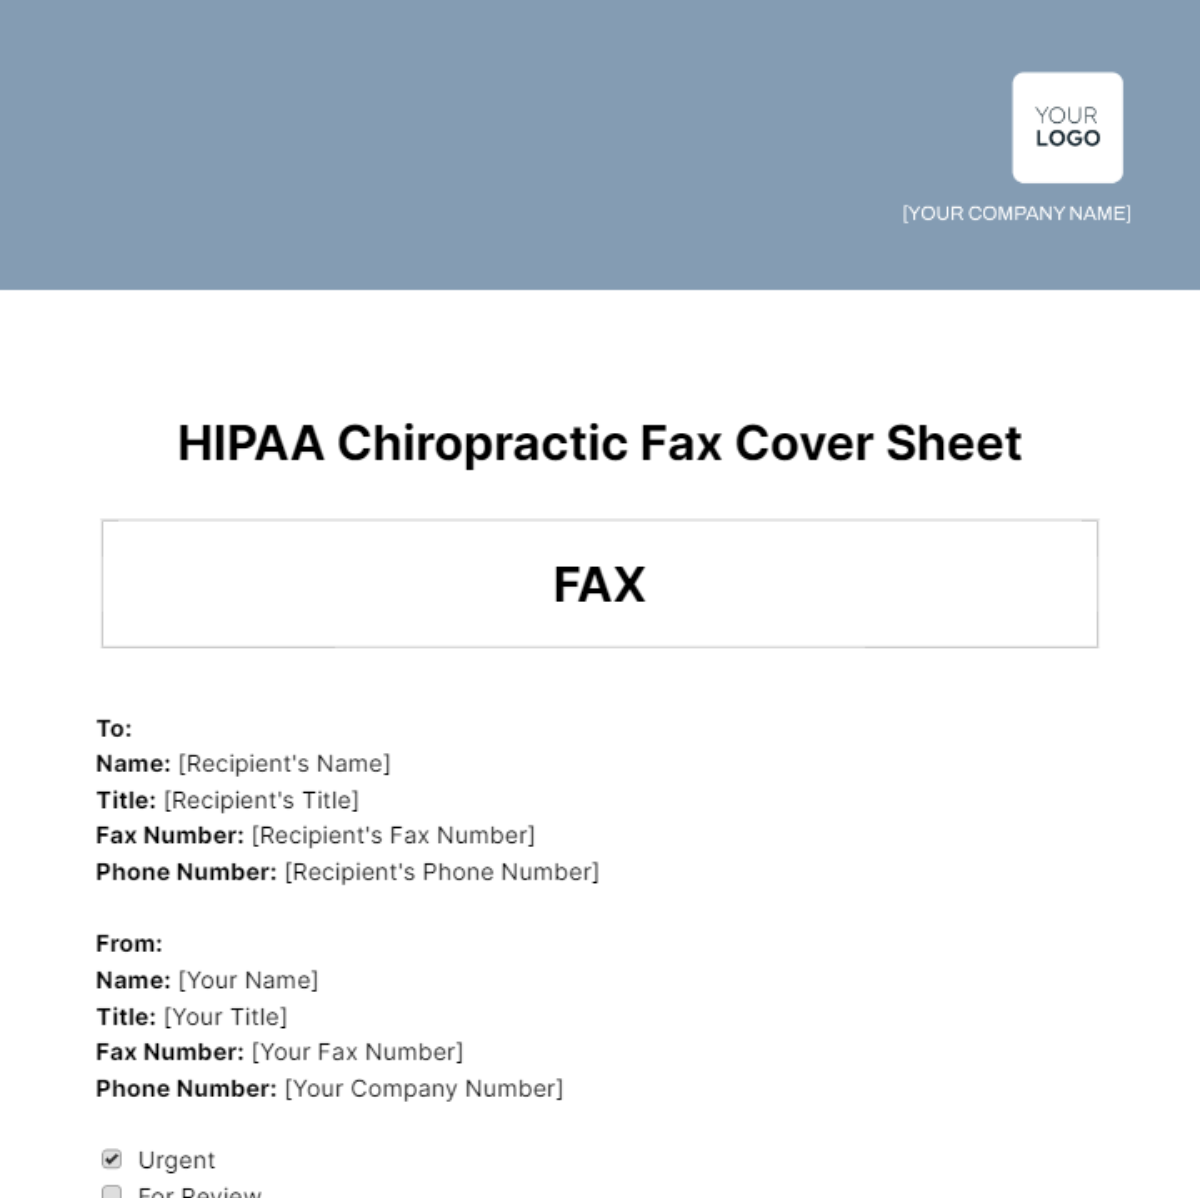 HIPAA Chiropractic Fax Cover Sheet Template